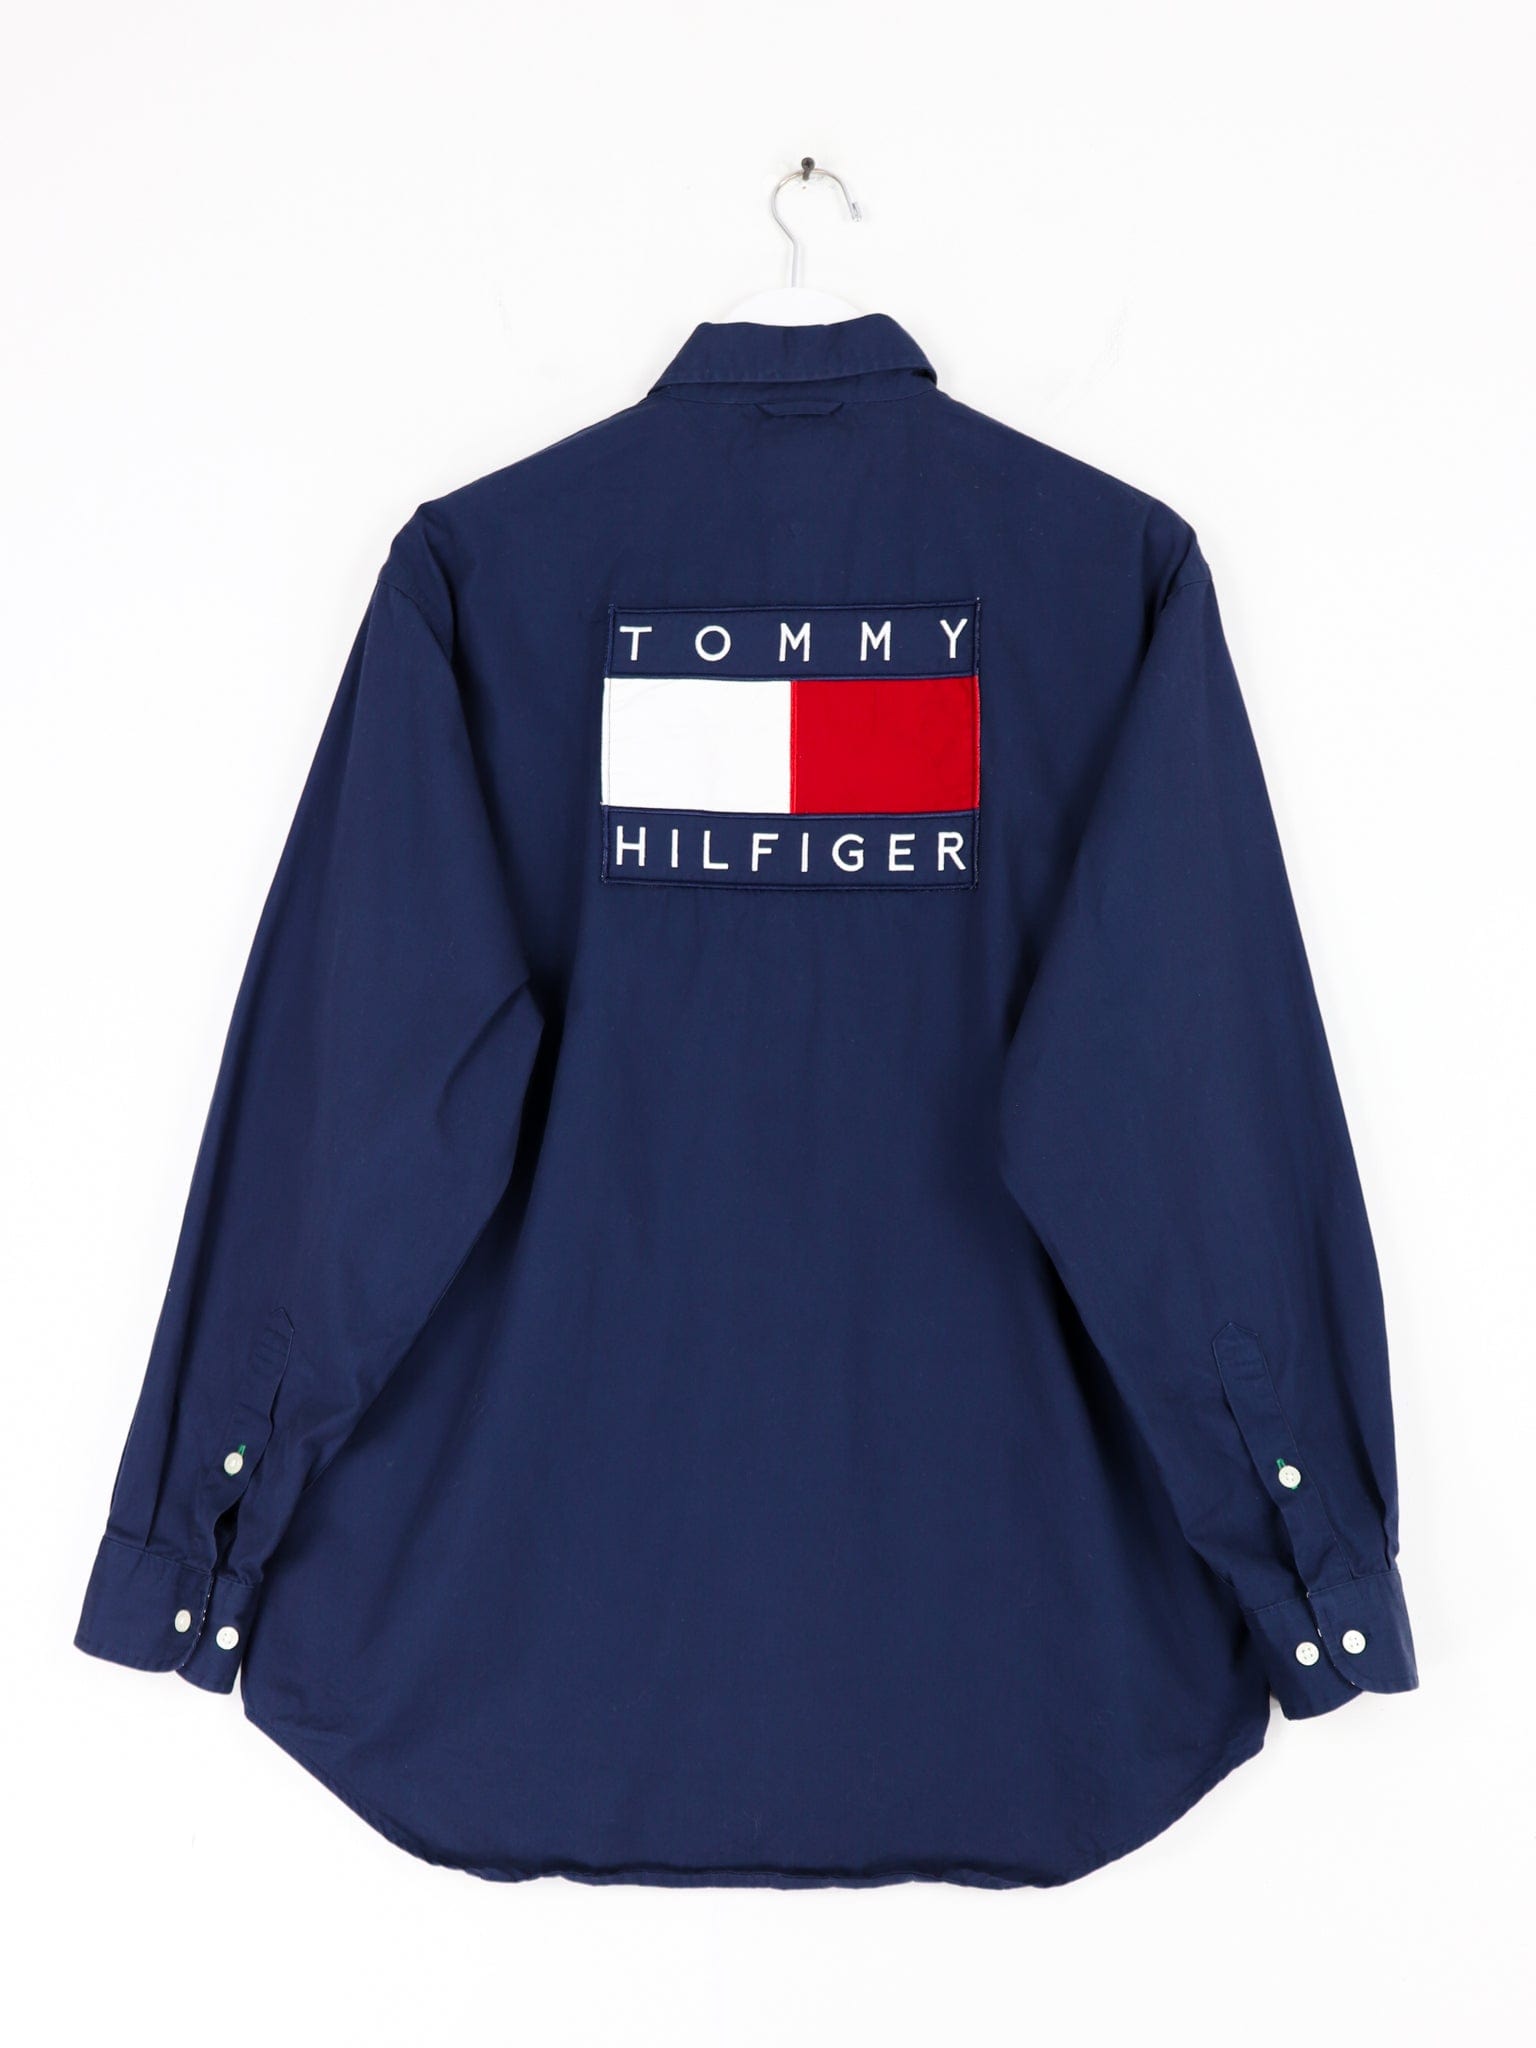 Tommy Hilfiger USA Button Shirt Size Small Fits Medium – Vintage